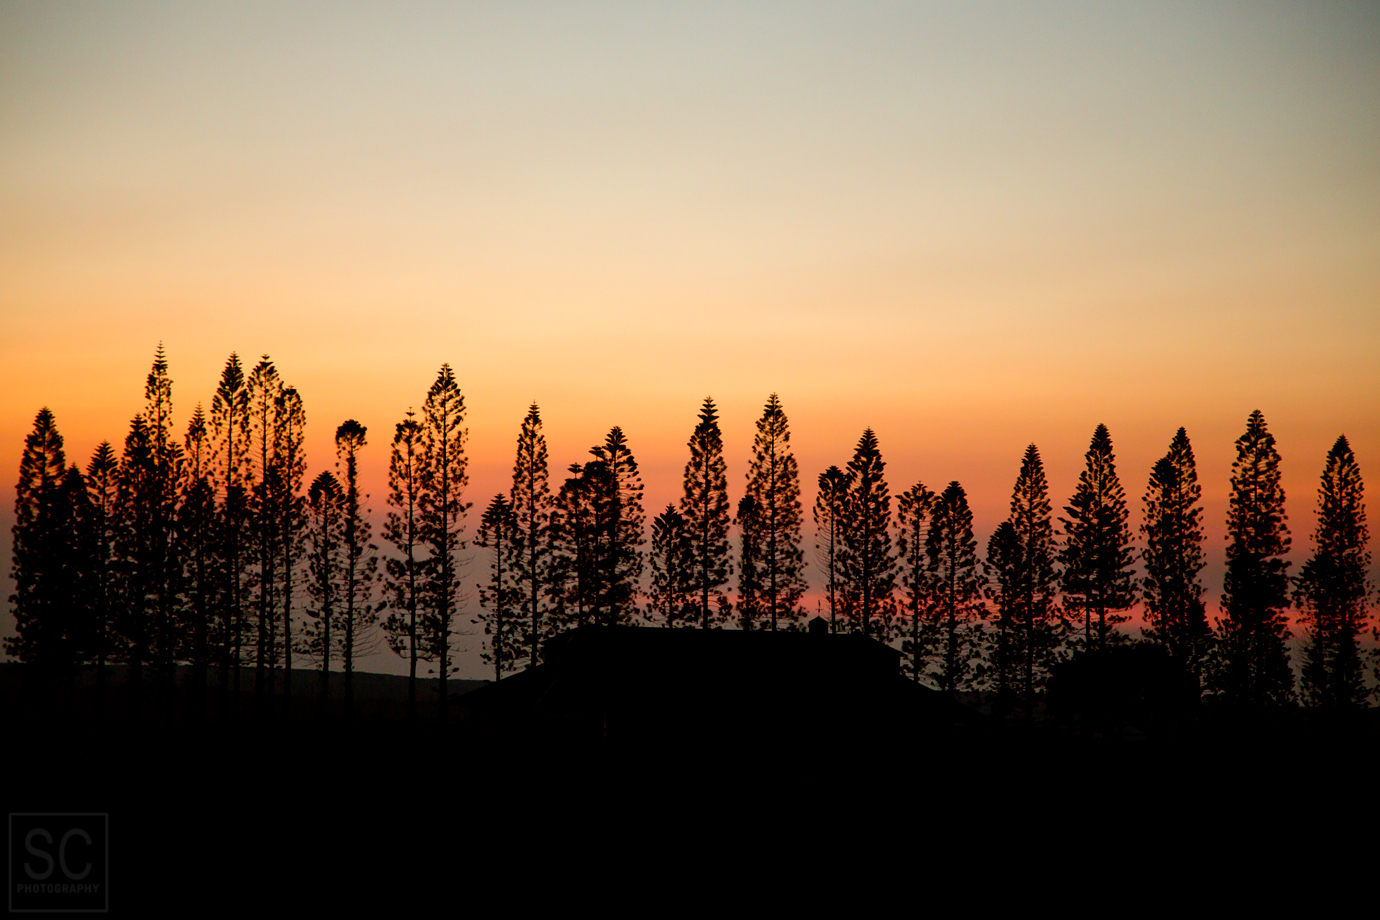 Pine trees at sunset